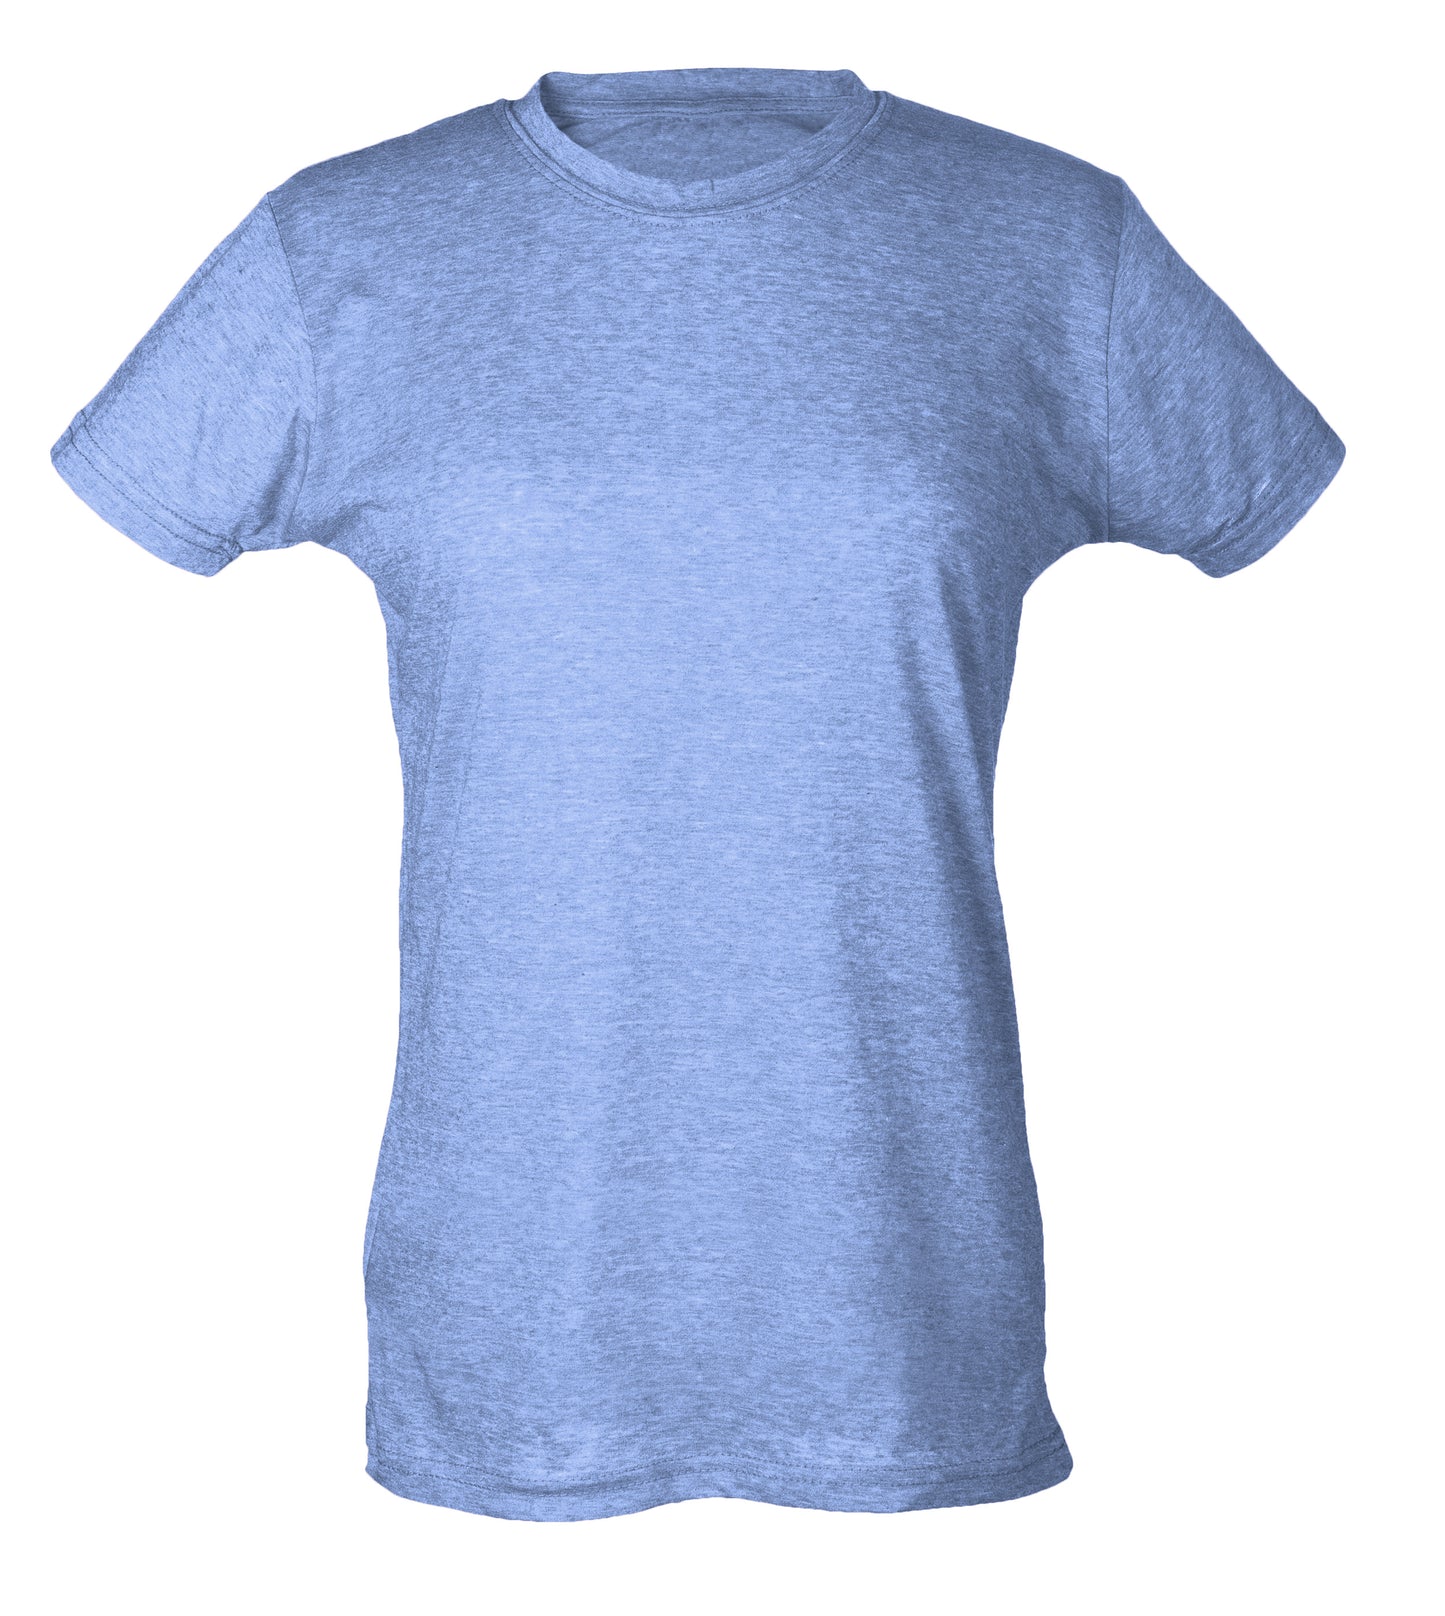 Tultex 240 - Women's Poly-Rich Slim Fit T-Shirt